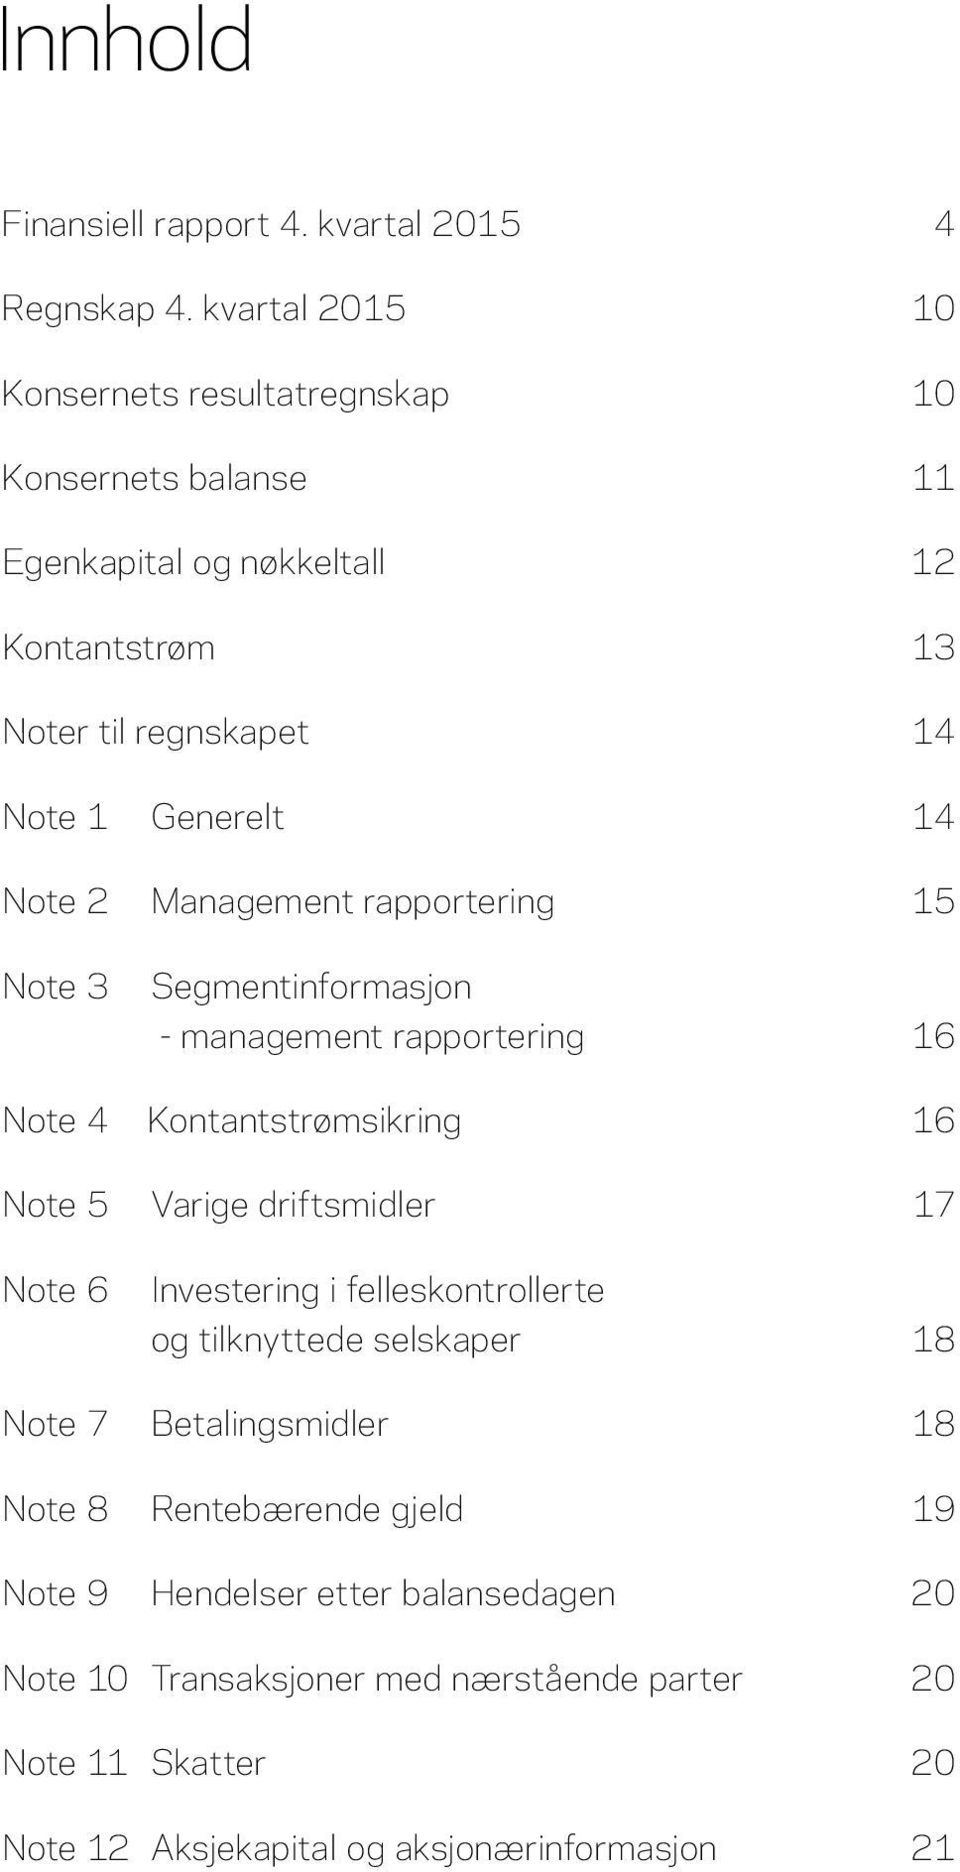 Note 2 Management rapportering 15 Note 3 Segmentinformasjon - management rapportering 16 Note 4 Kontantstrømsikring 16 Note 5 Varige driftsmidler 17 Note 6